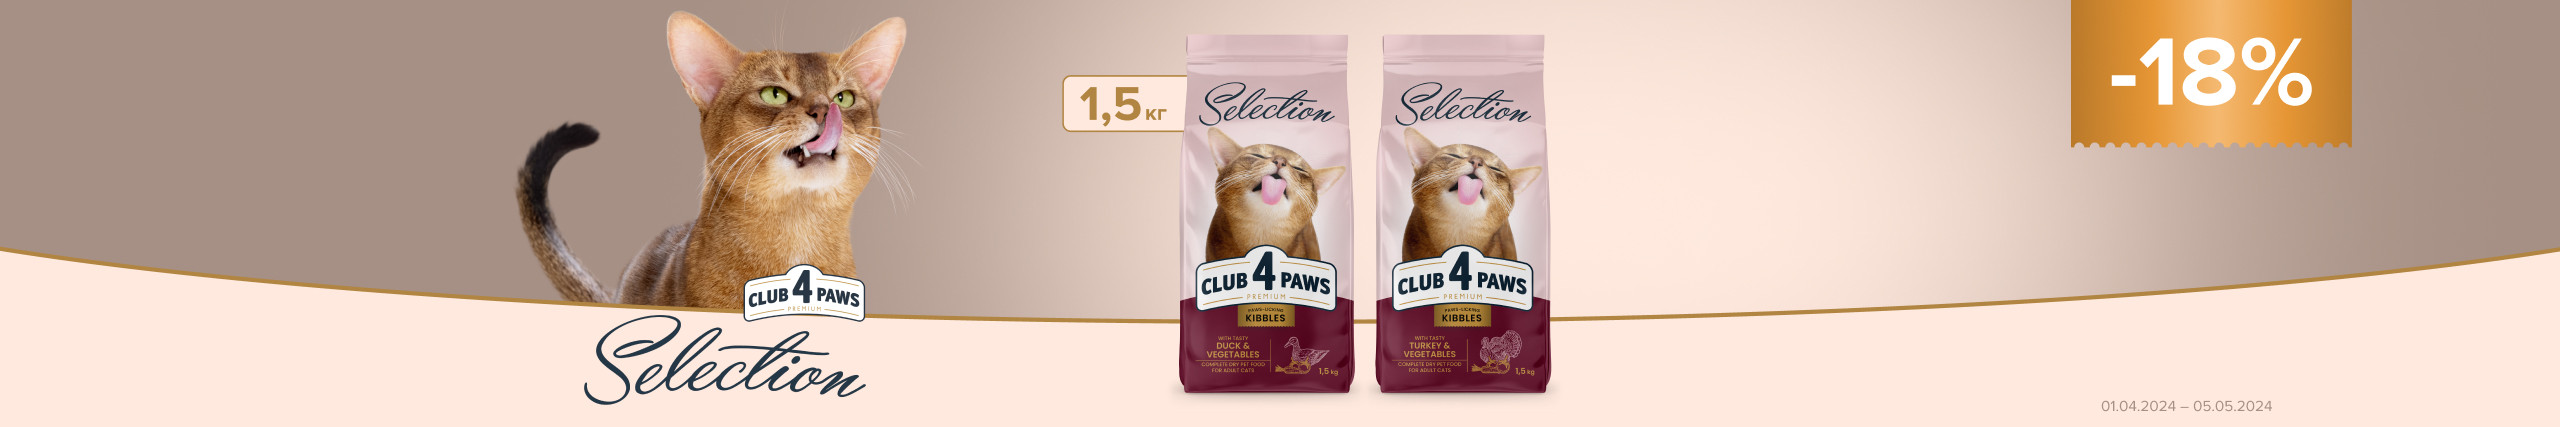 Скидка на Club 4 Paws Selection для кошек!